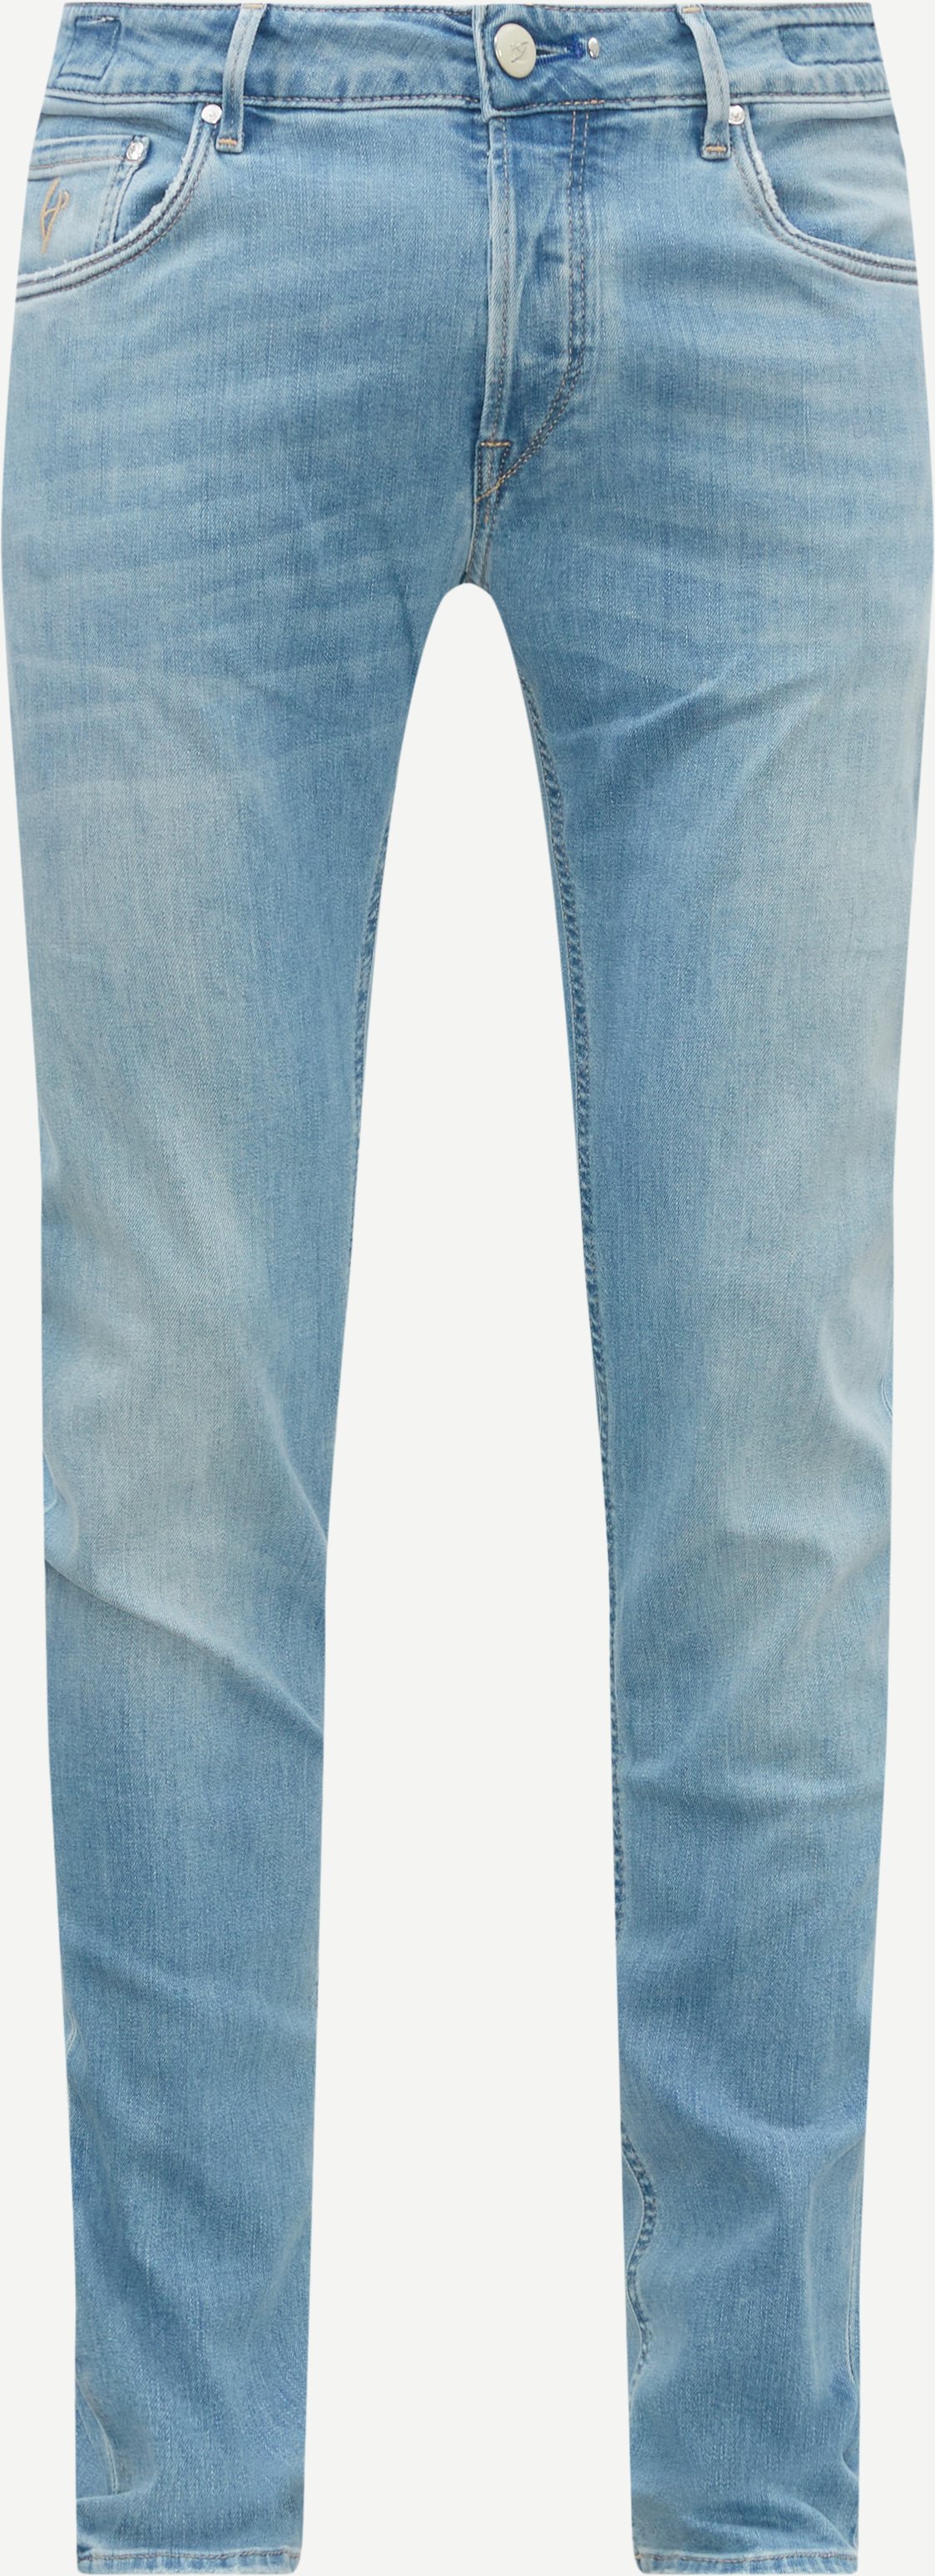 Handpicked Jeans 2876 004 ORVIETO Denim